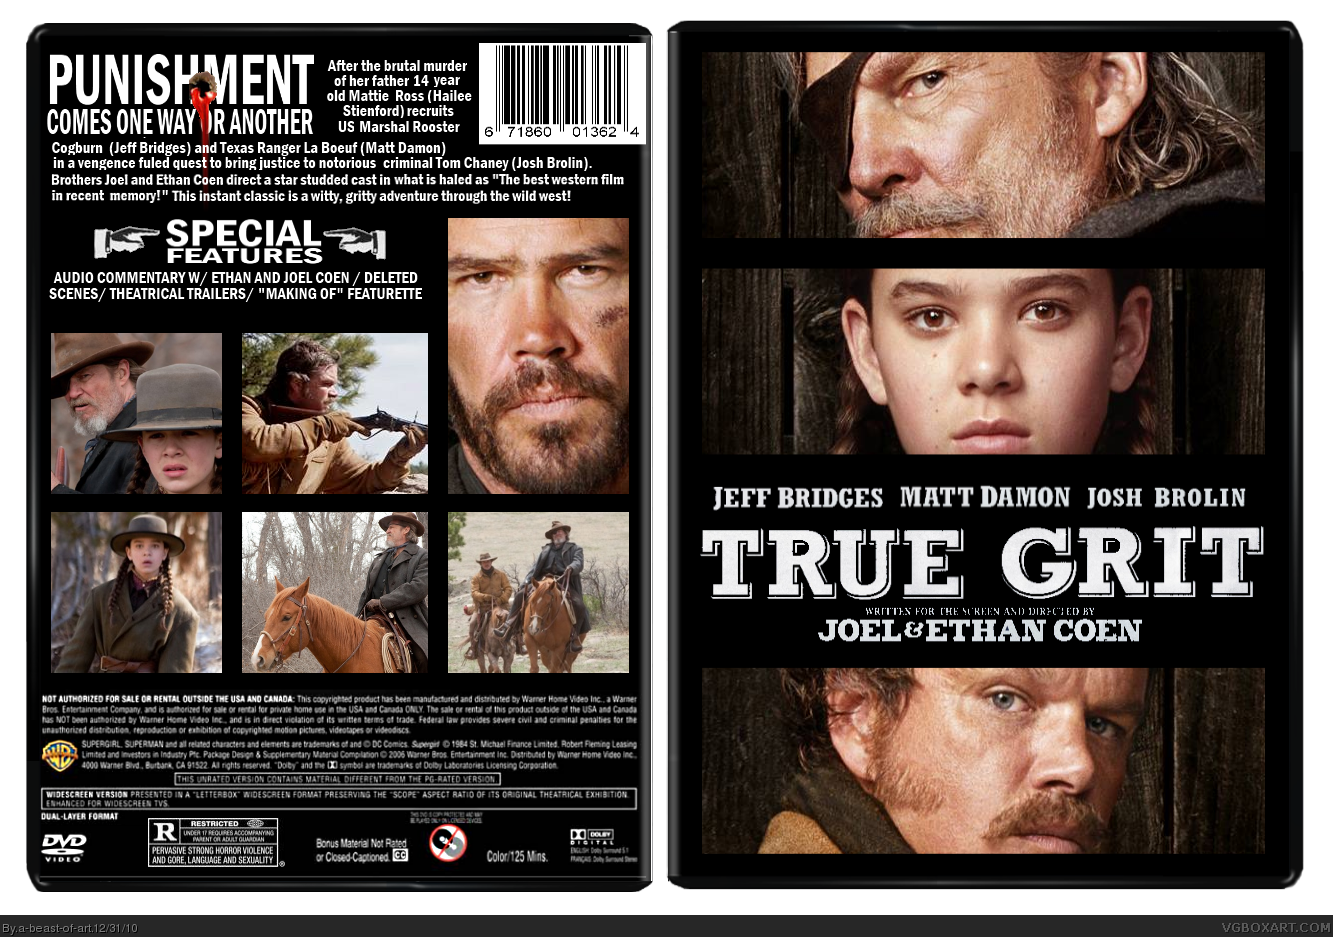 True Grit box cover